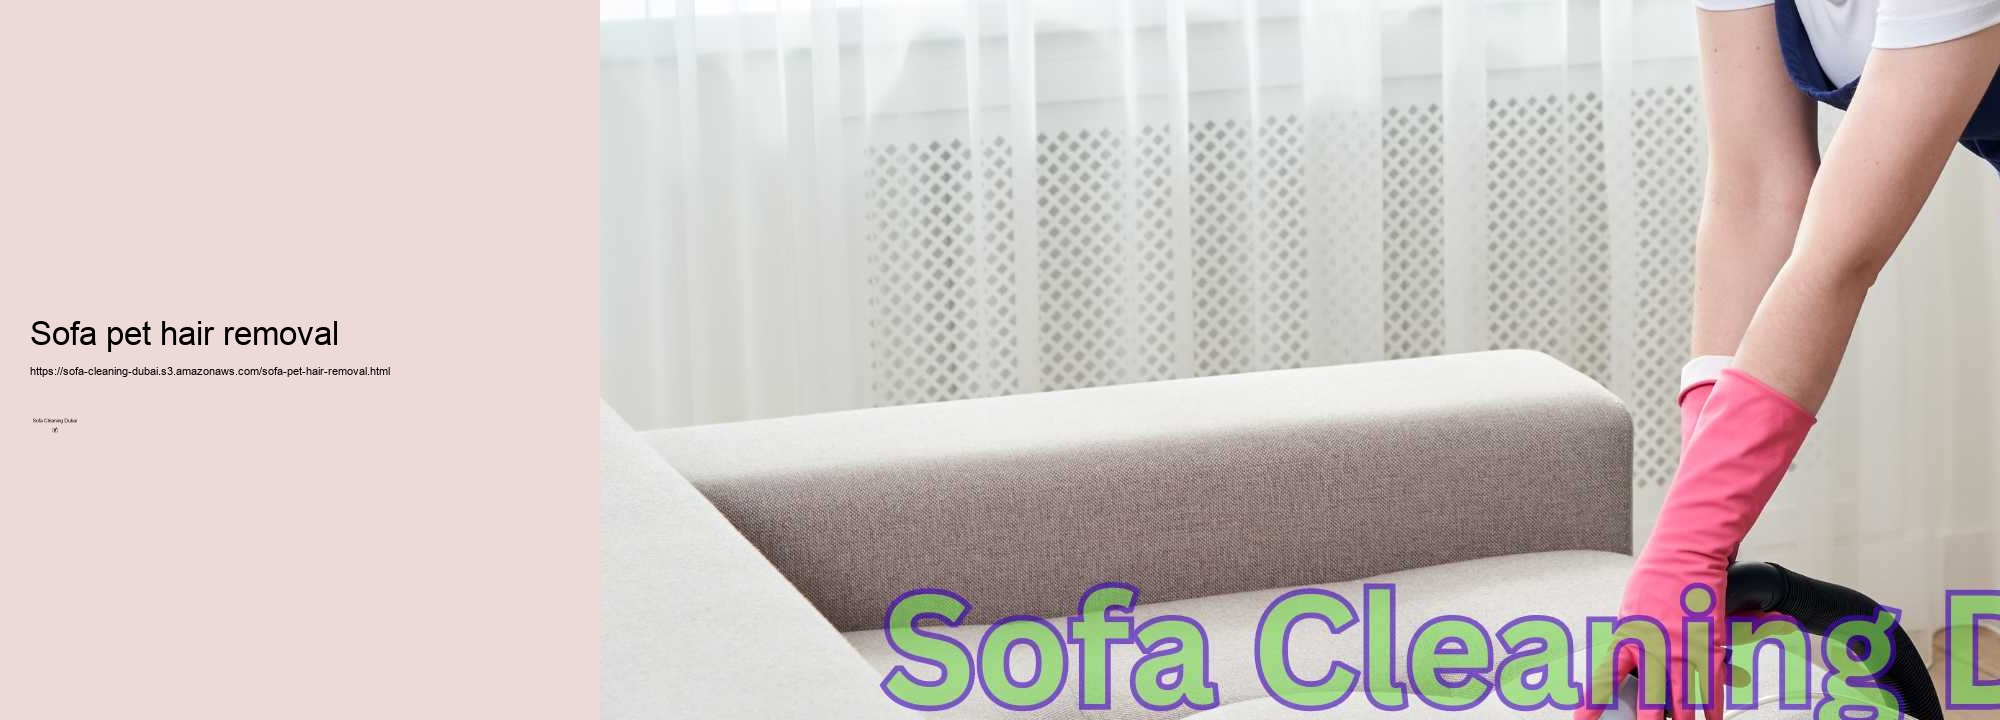 Sofa pet hair removal